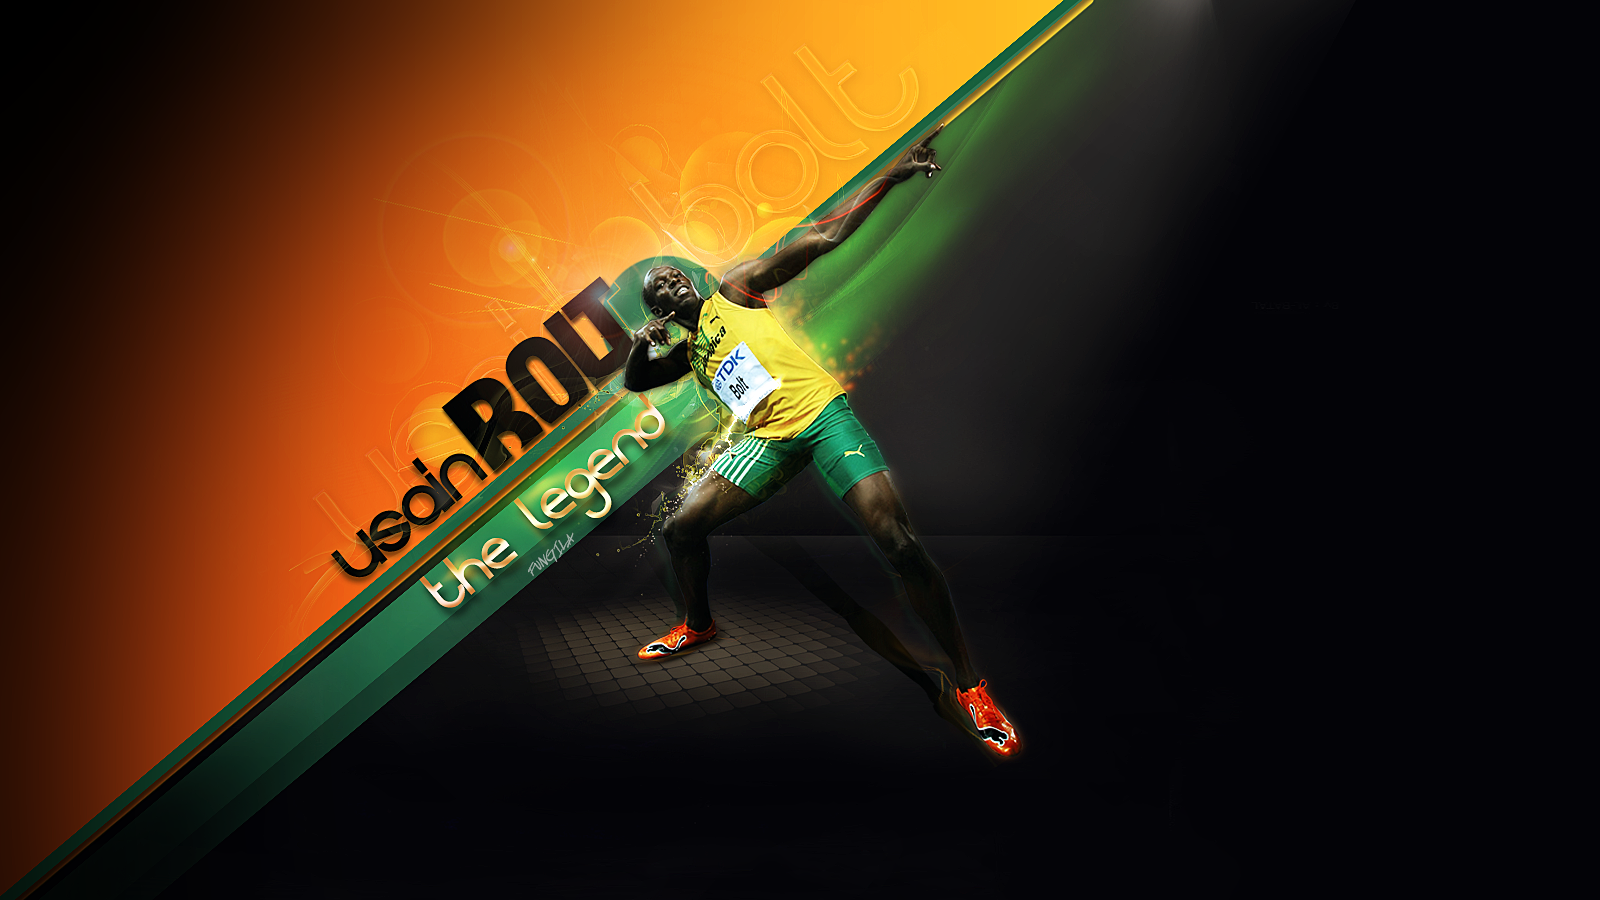 Usain Bolt Wallpaper 66 images